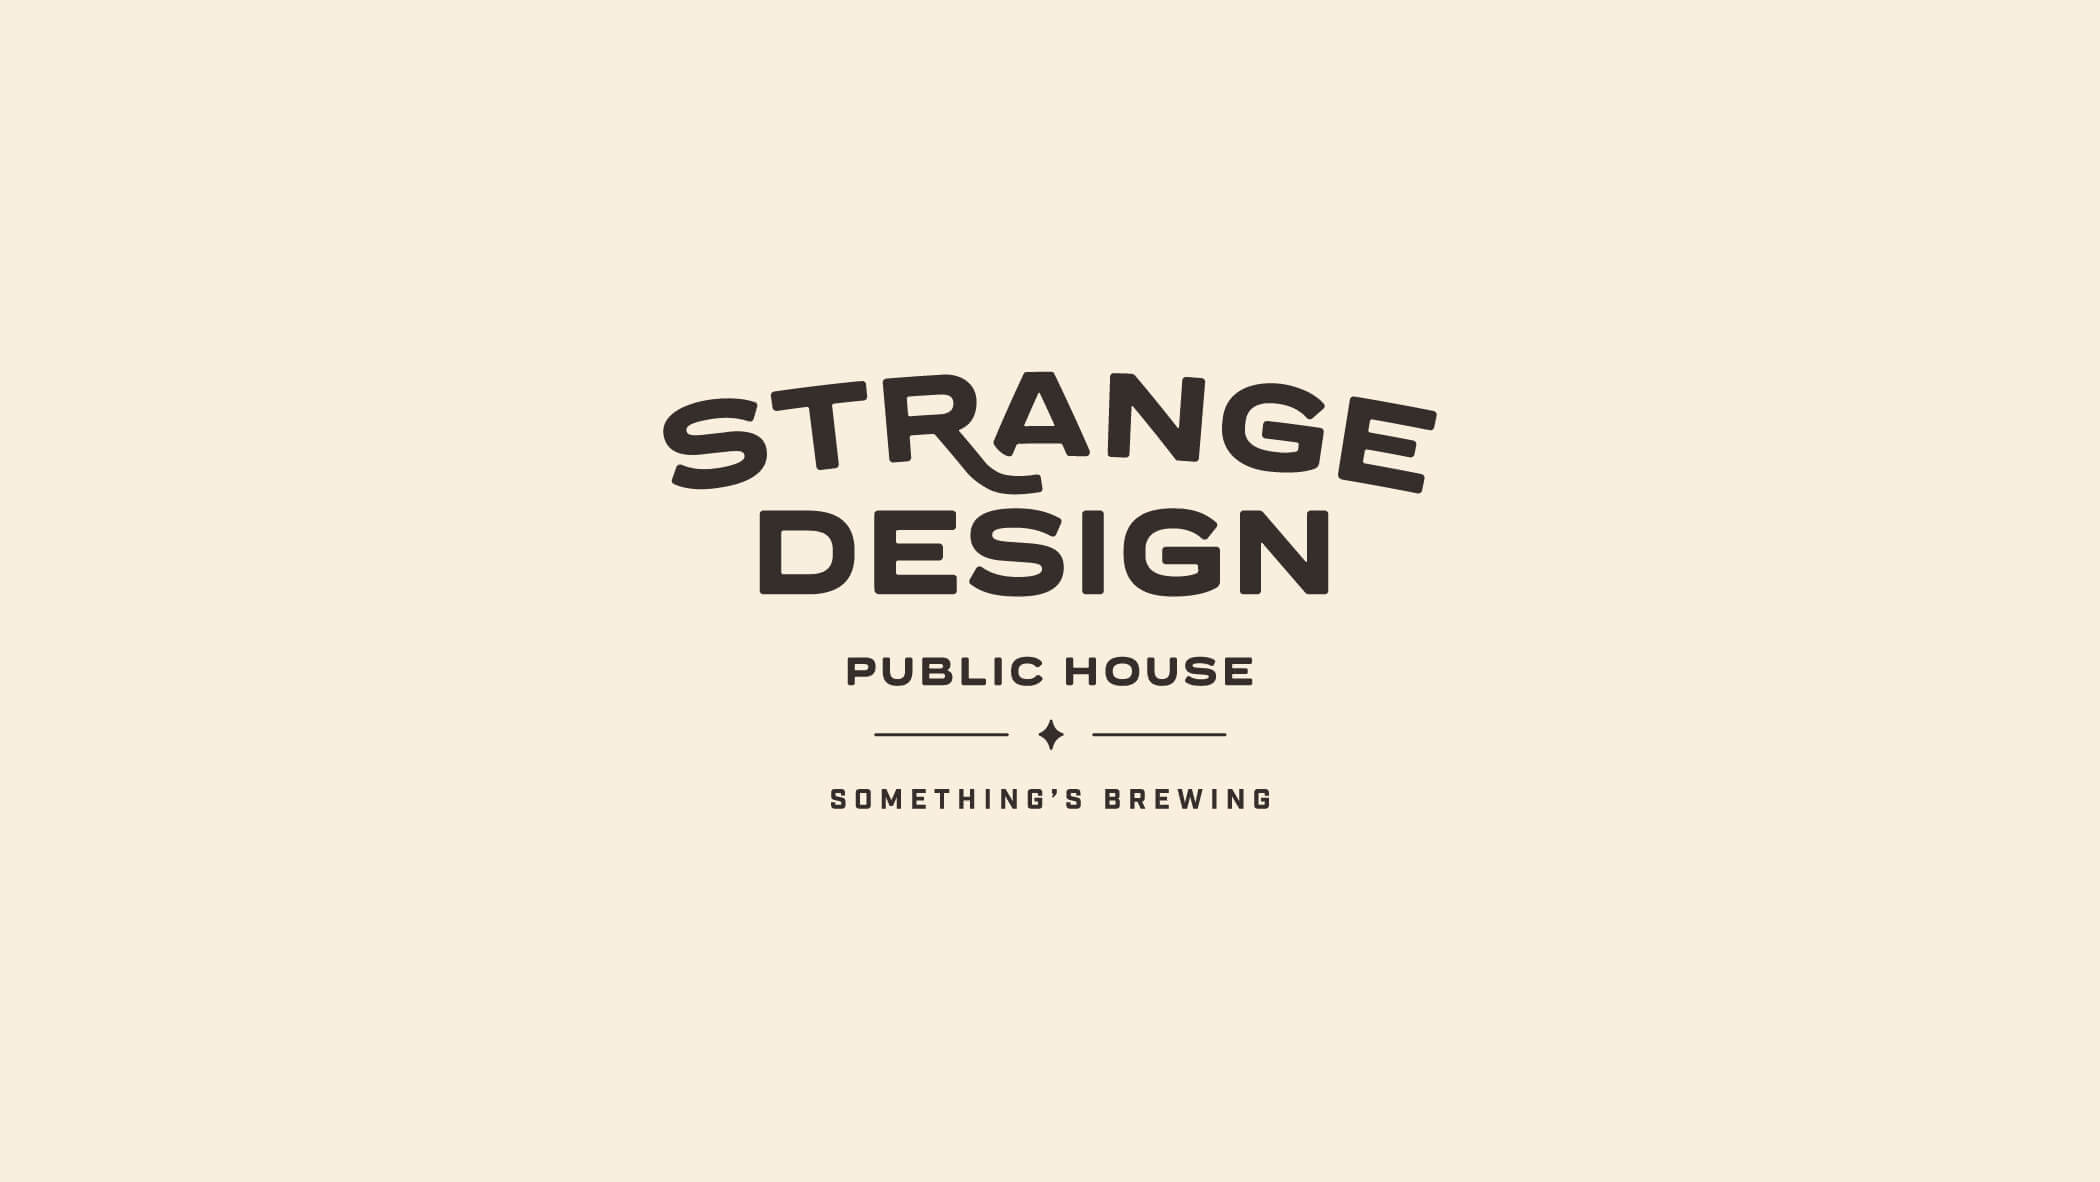 Strange Design Public House logo with tagline